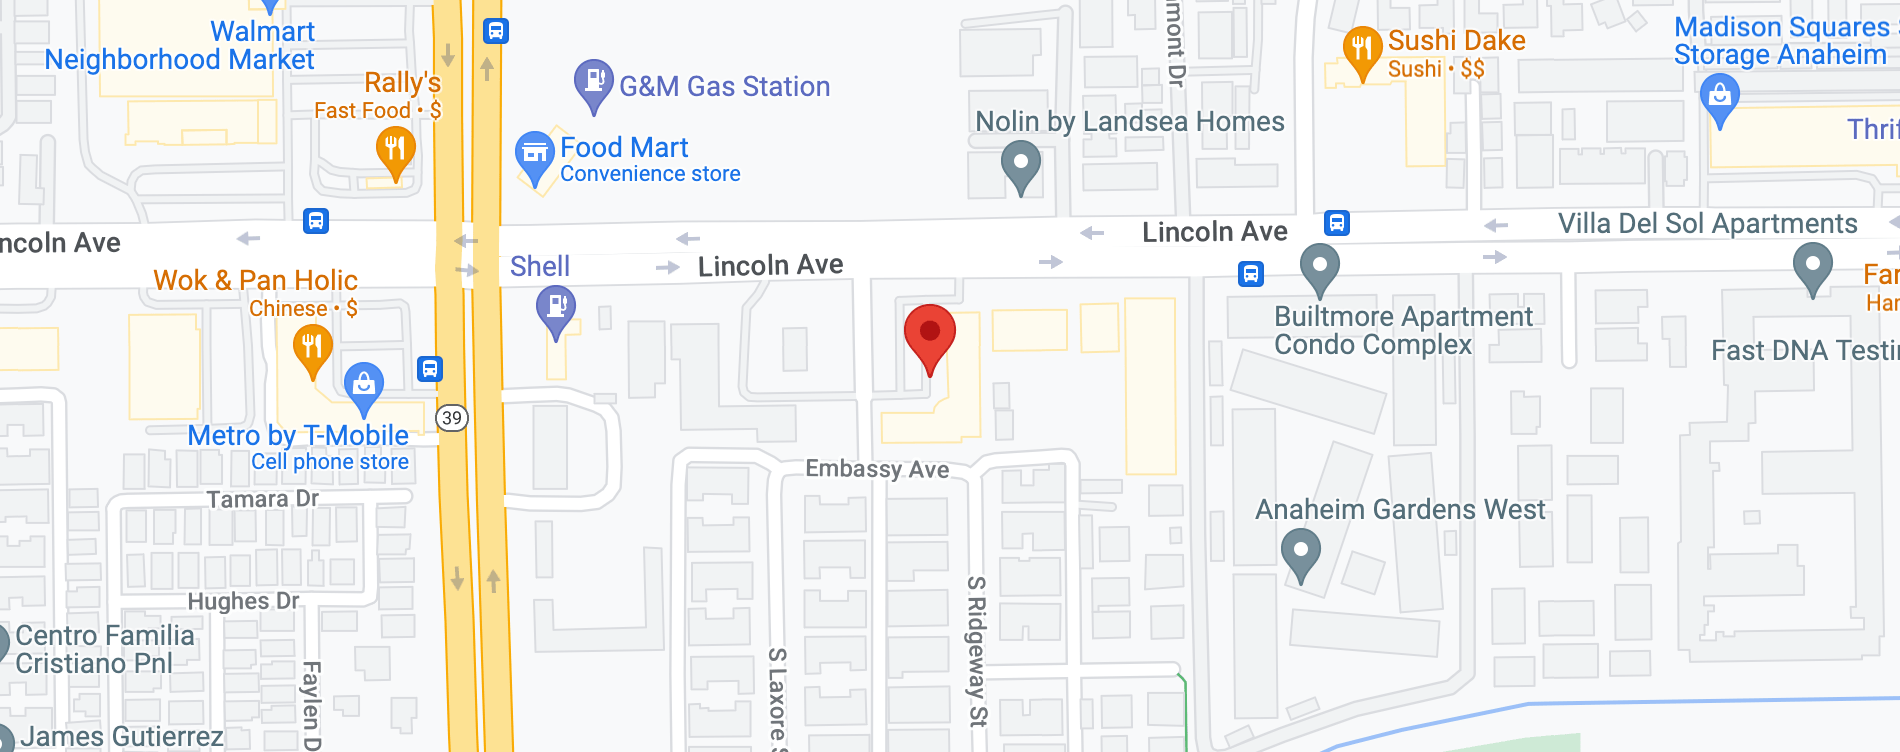 Google Maps Address 2940 W. Lincoln Ave. Ste L - Anaheim, CA 92801